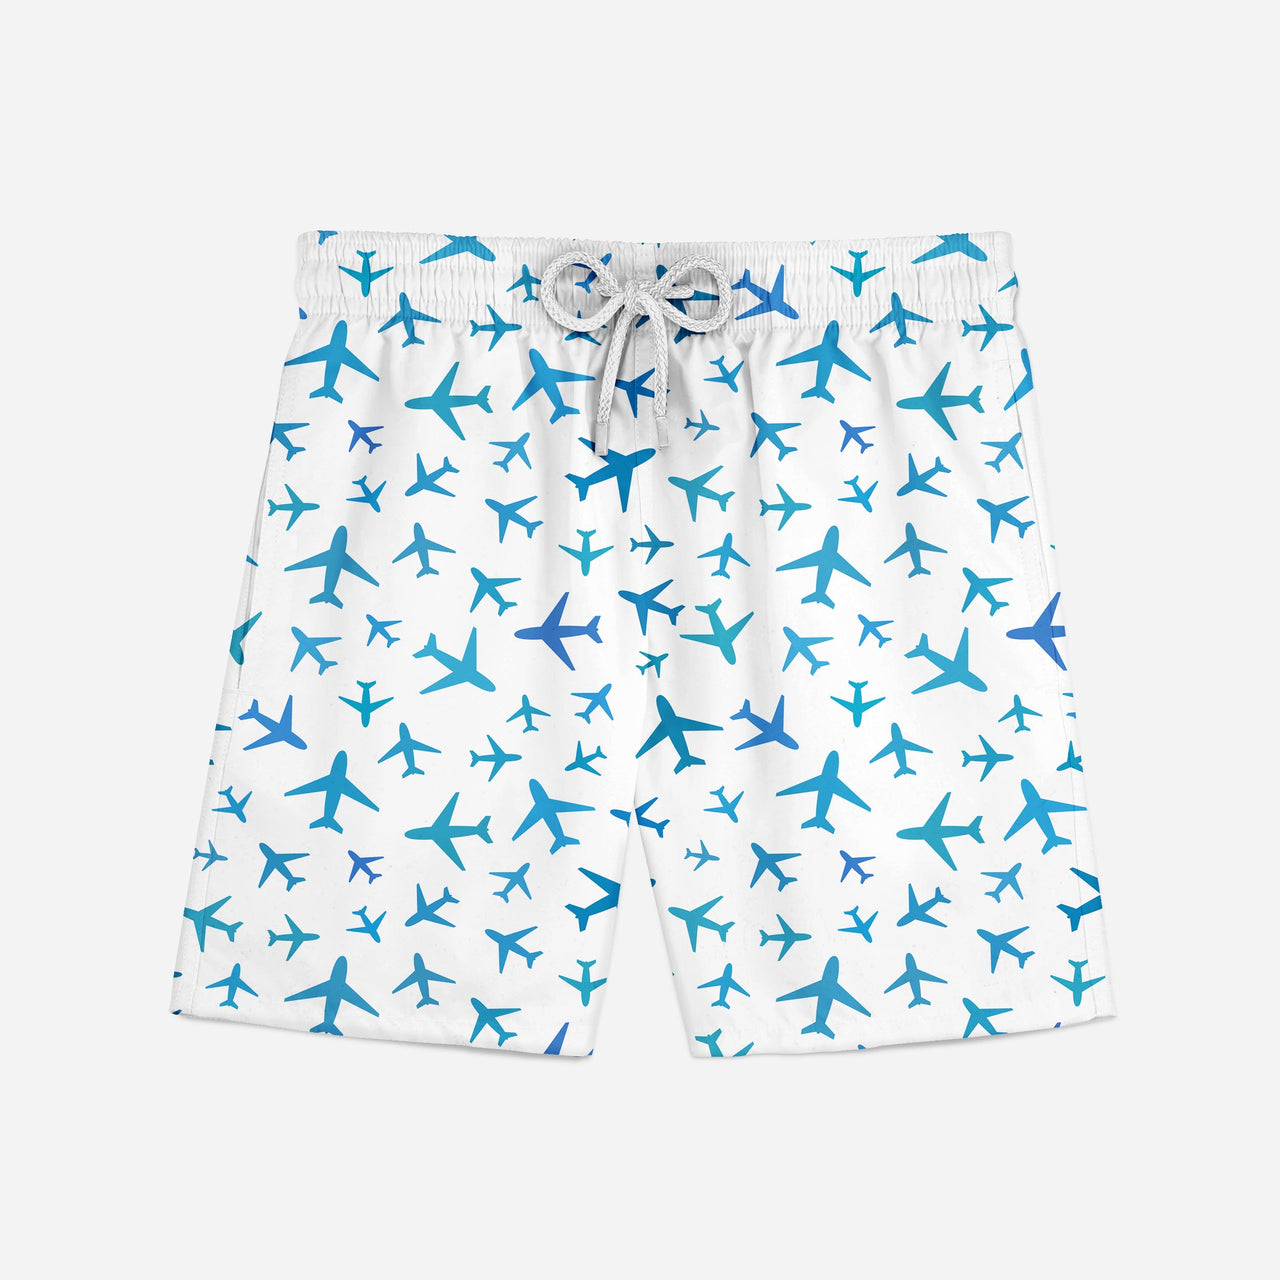 Many Airplanes (White) Designed Swim Trunks & Shorts